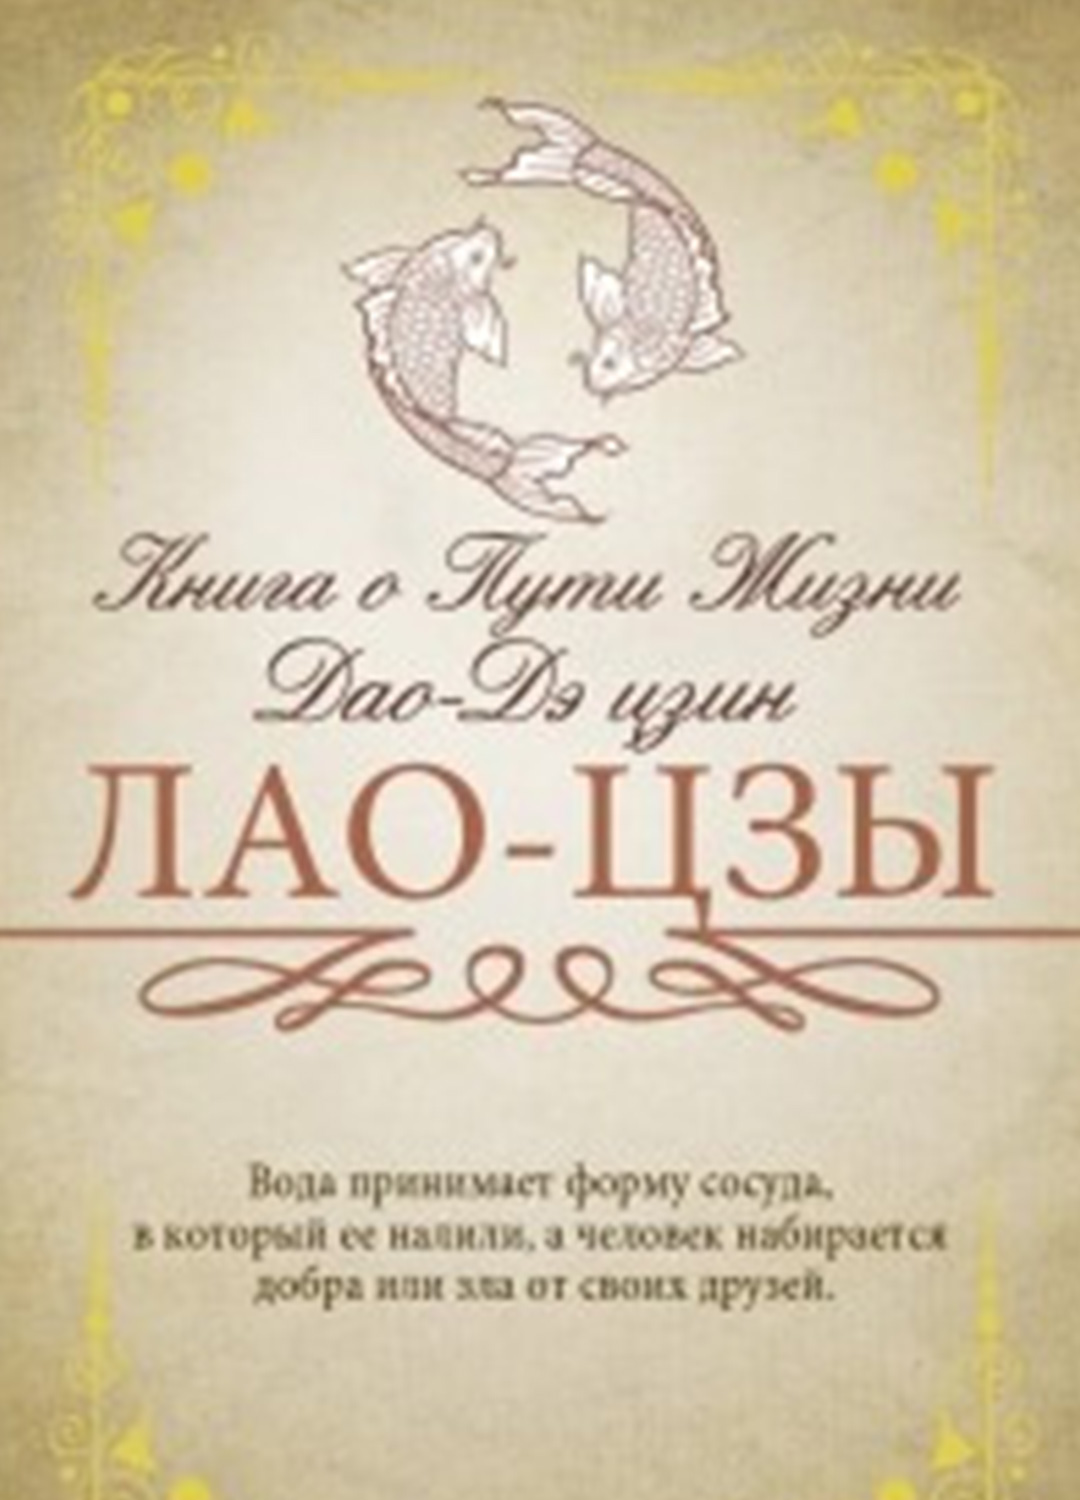 «Книга о Пути Жизни (Дао-Дэ цзин)» — Владимир Малявин, 2018г.